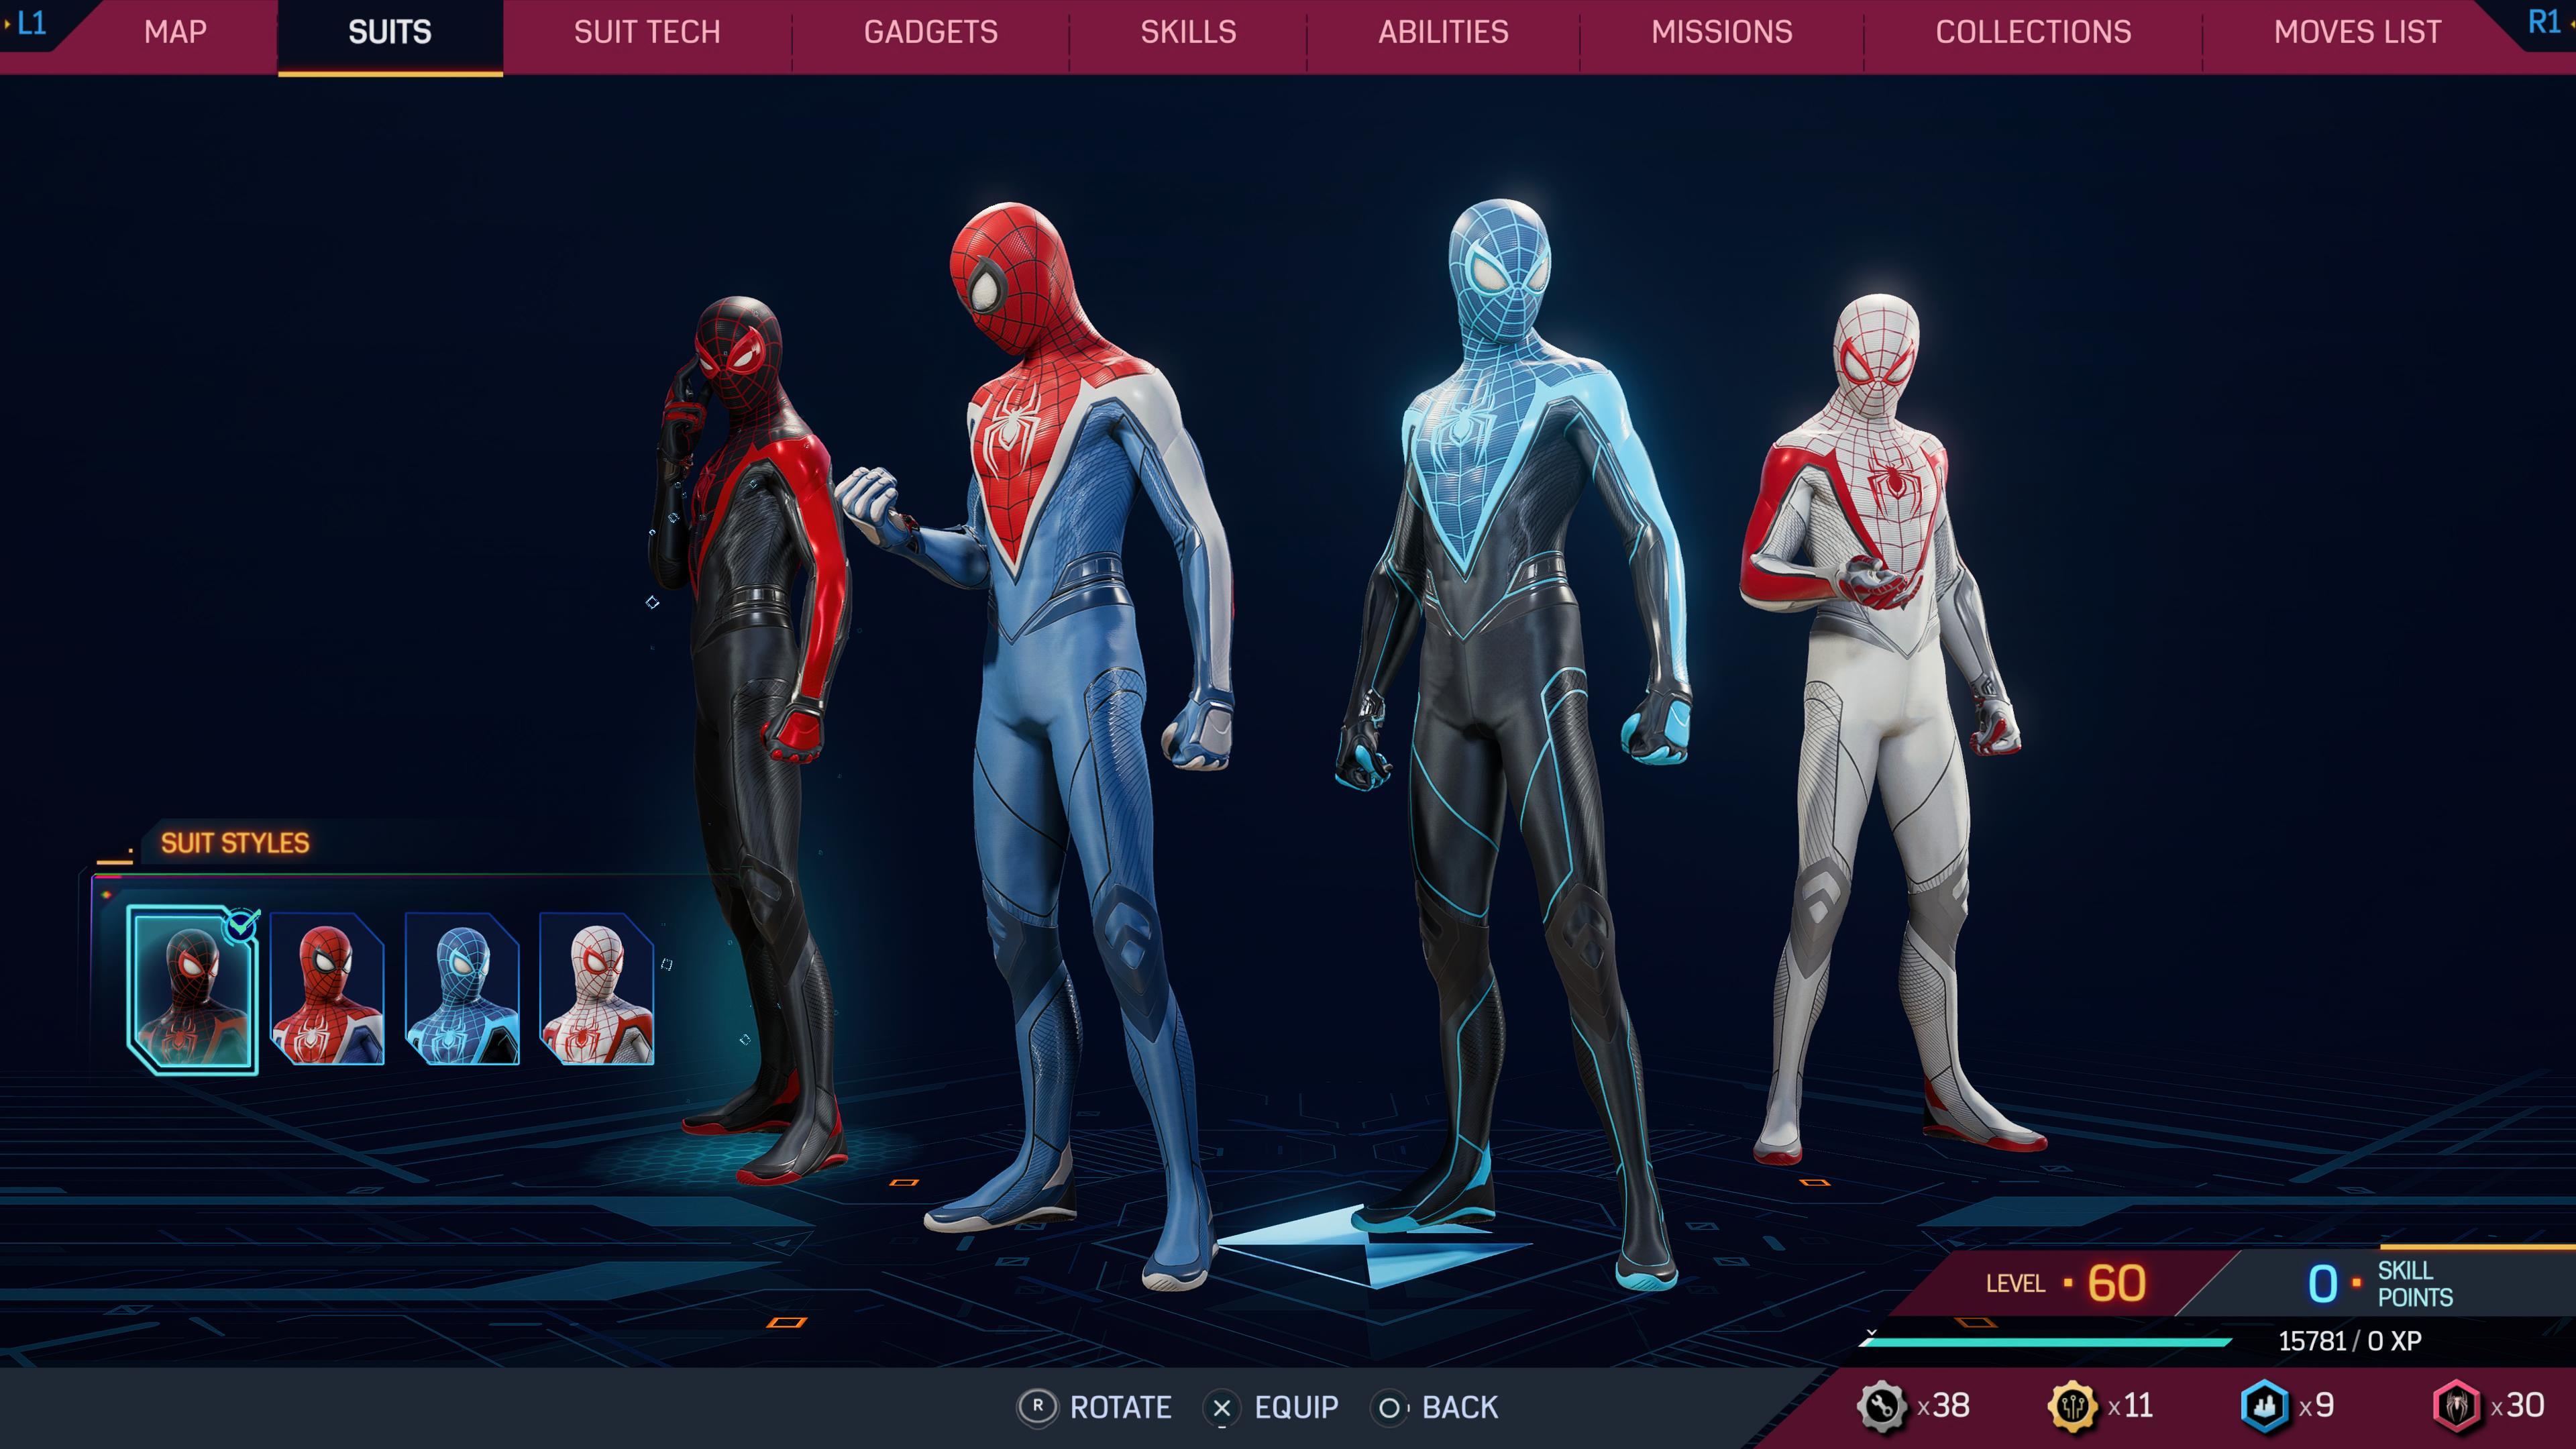 Spider-Man 2: The Origins of Every Unlockable Costume